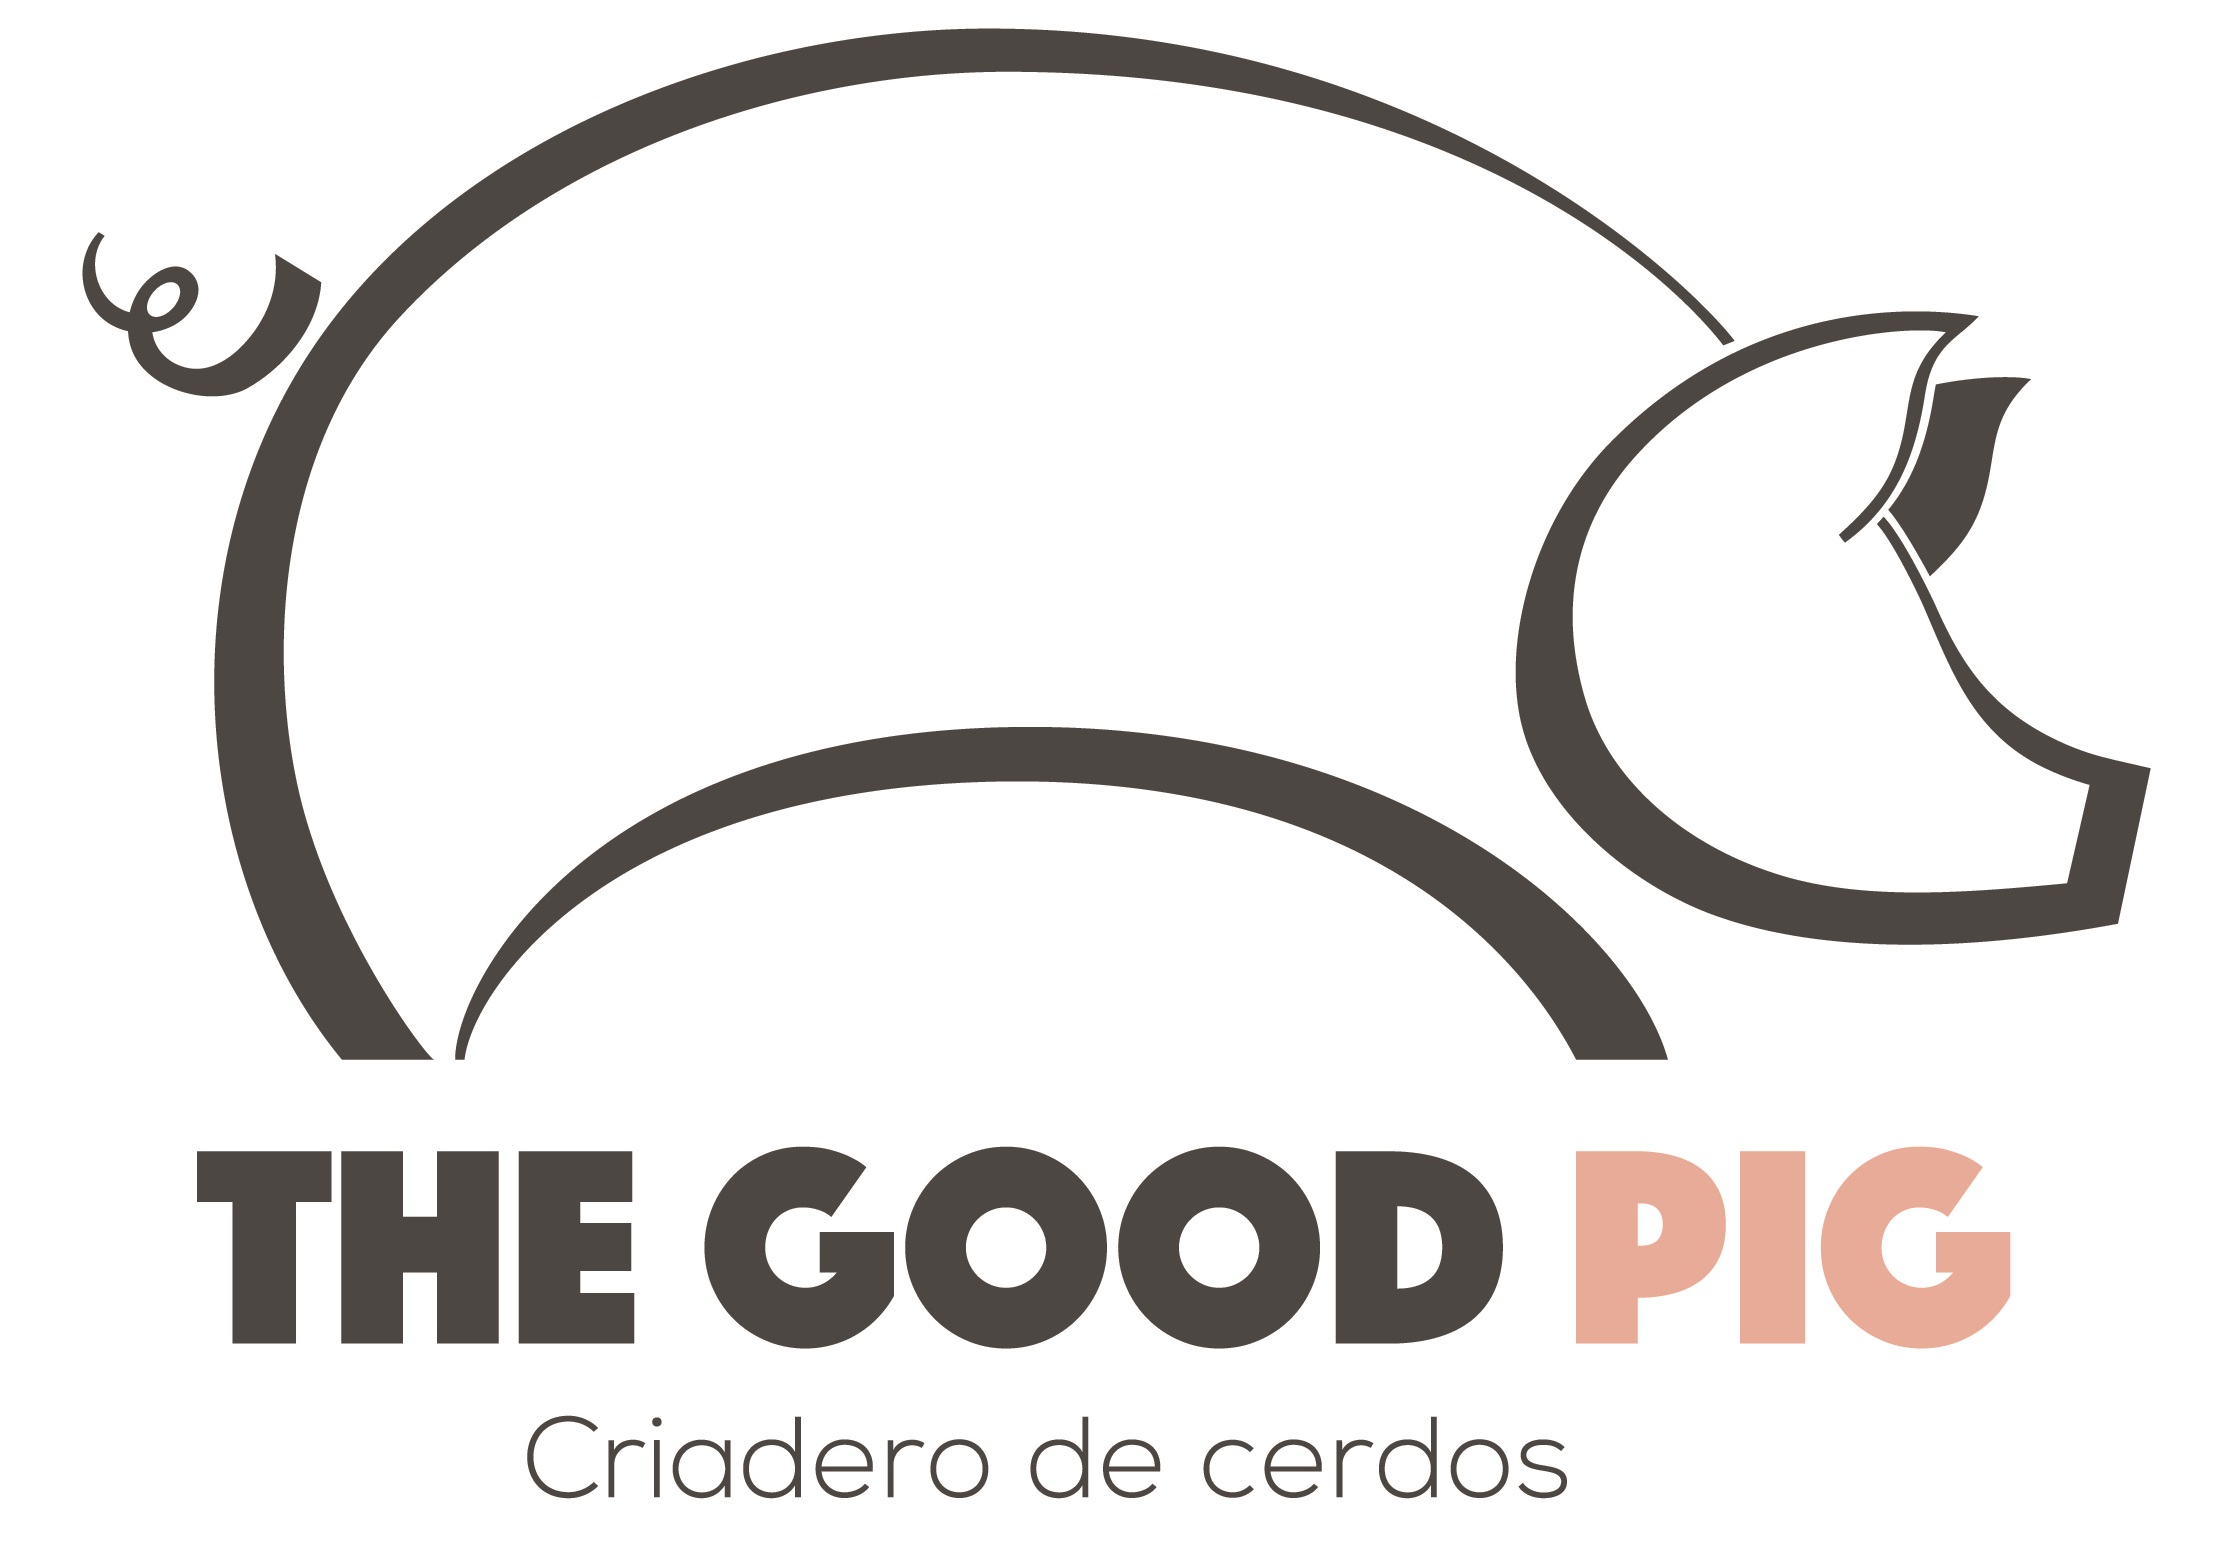 The Good Pig